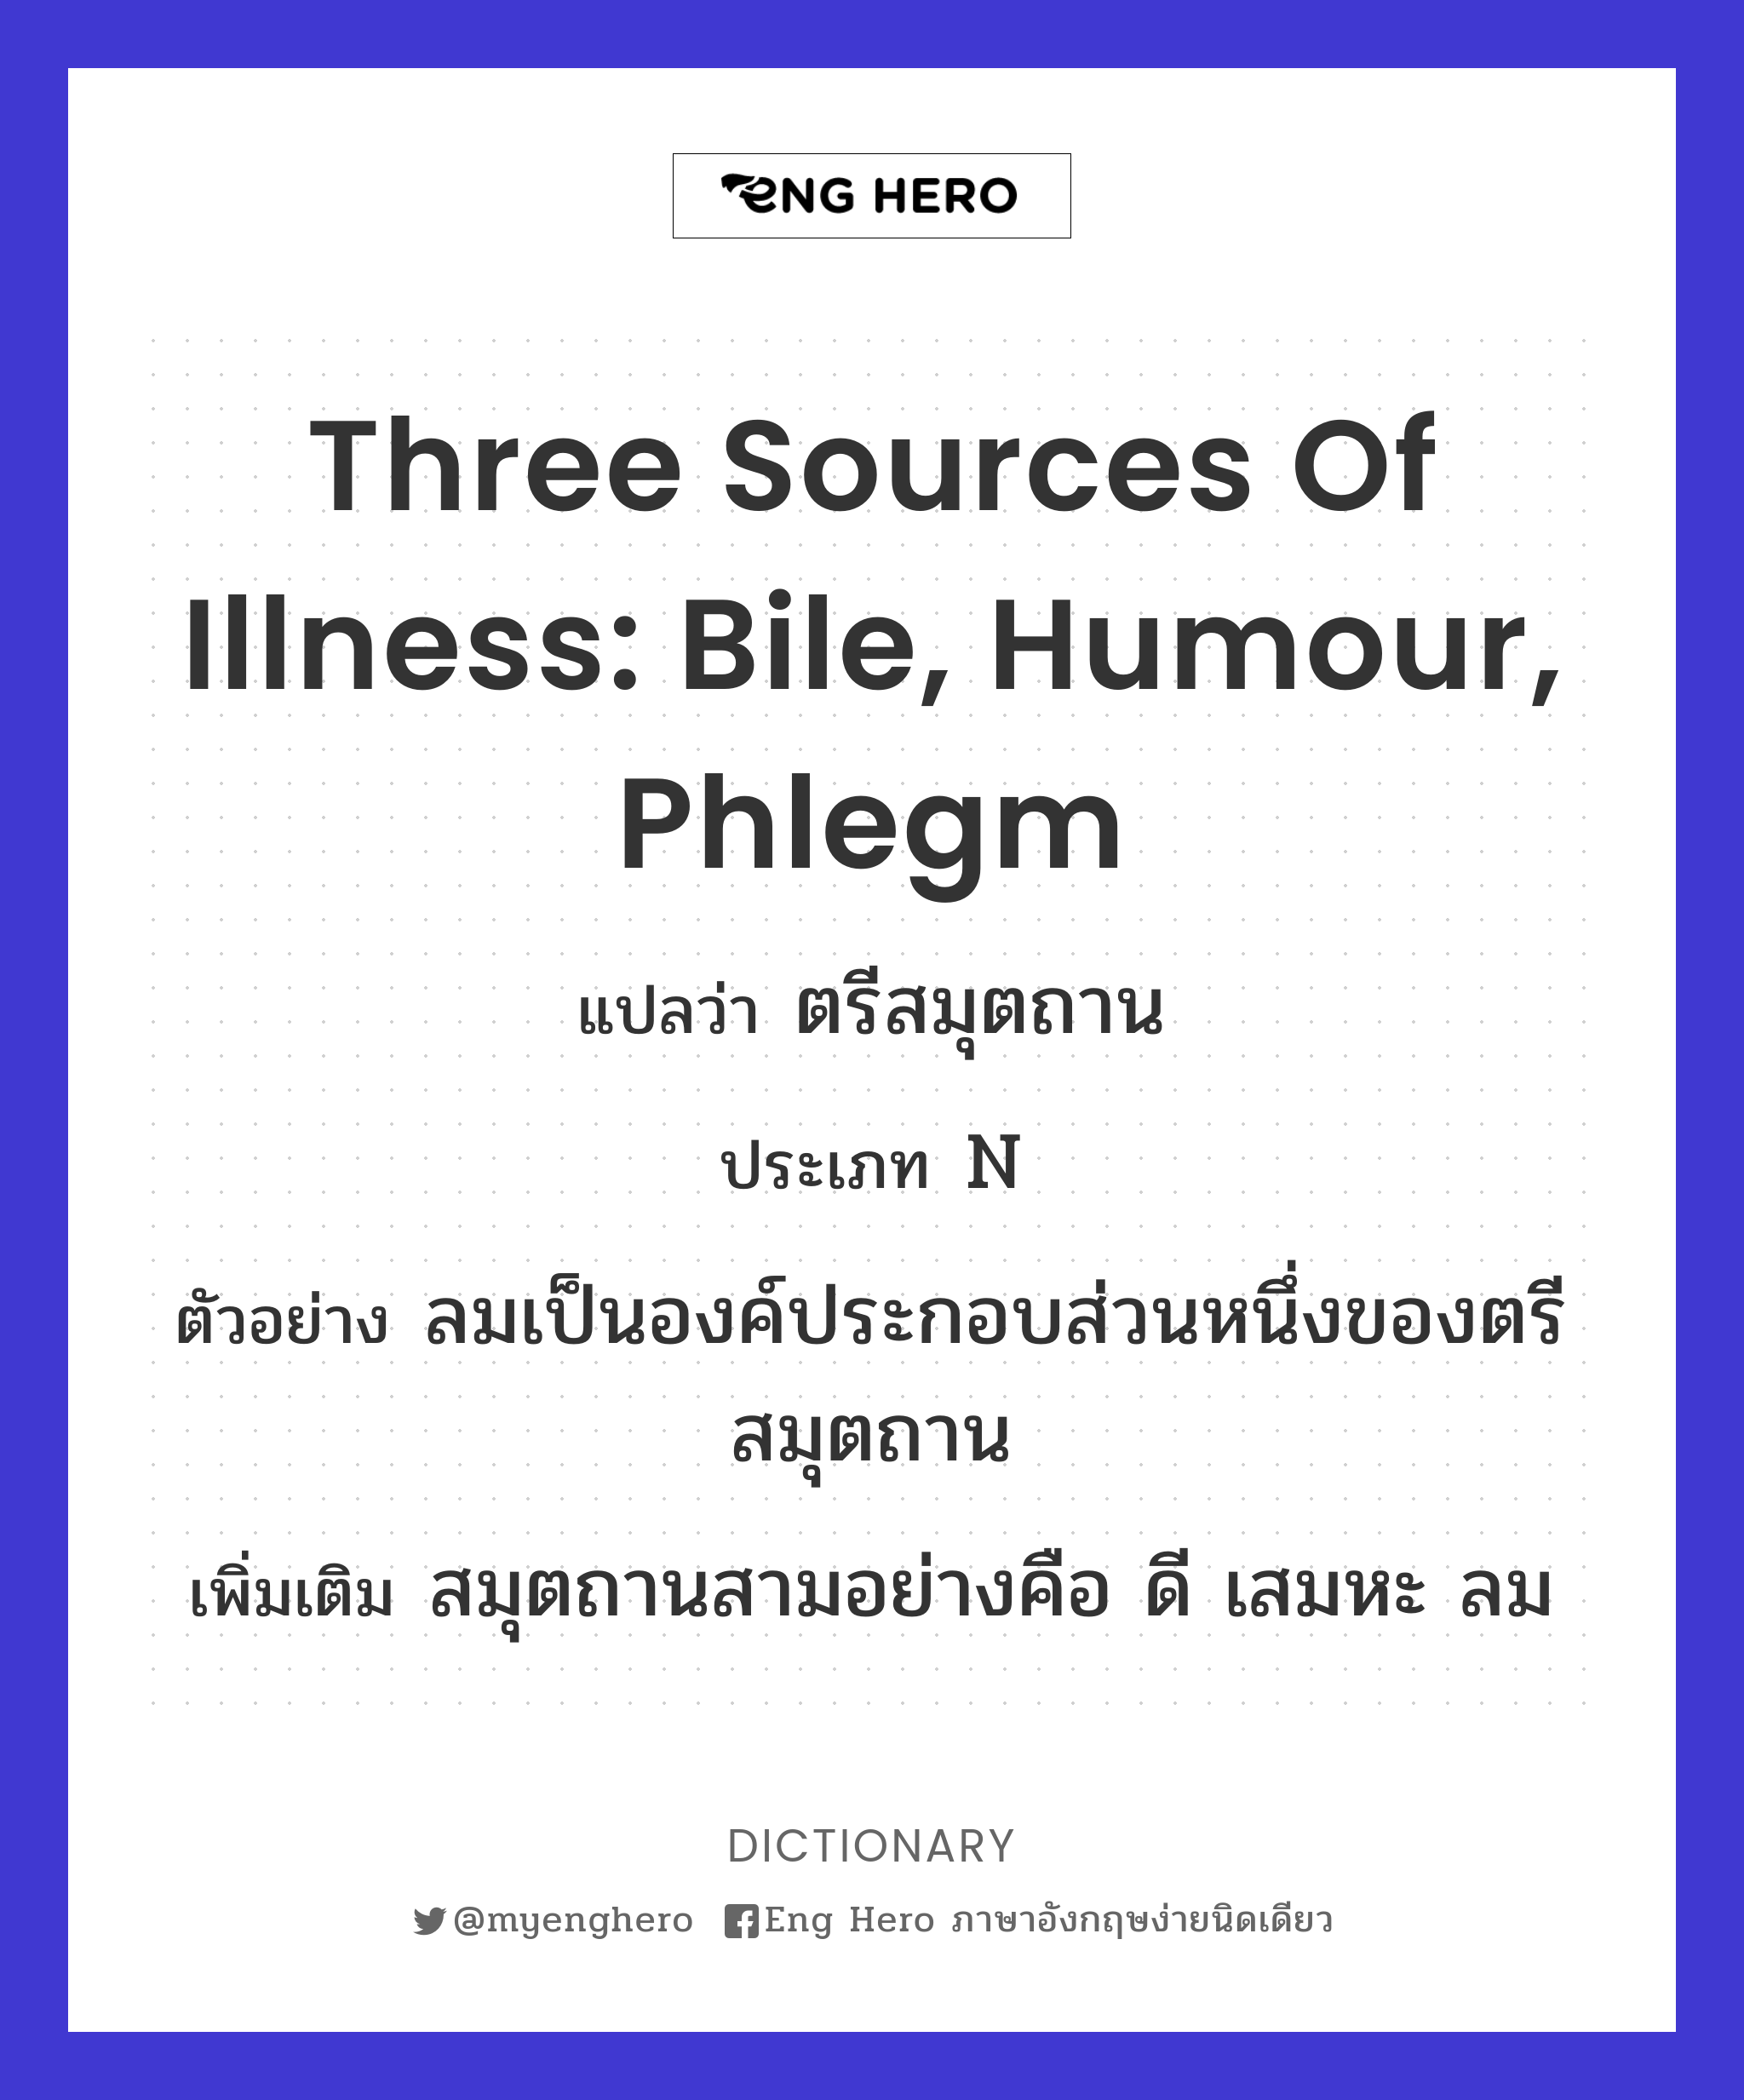 three sources of illness: bile, humour, phlegm